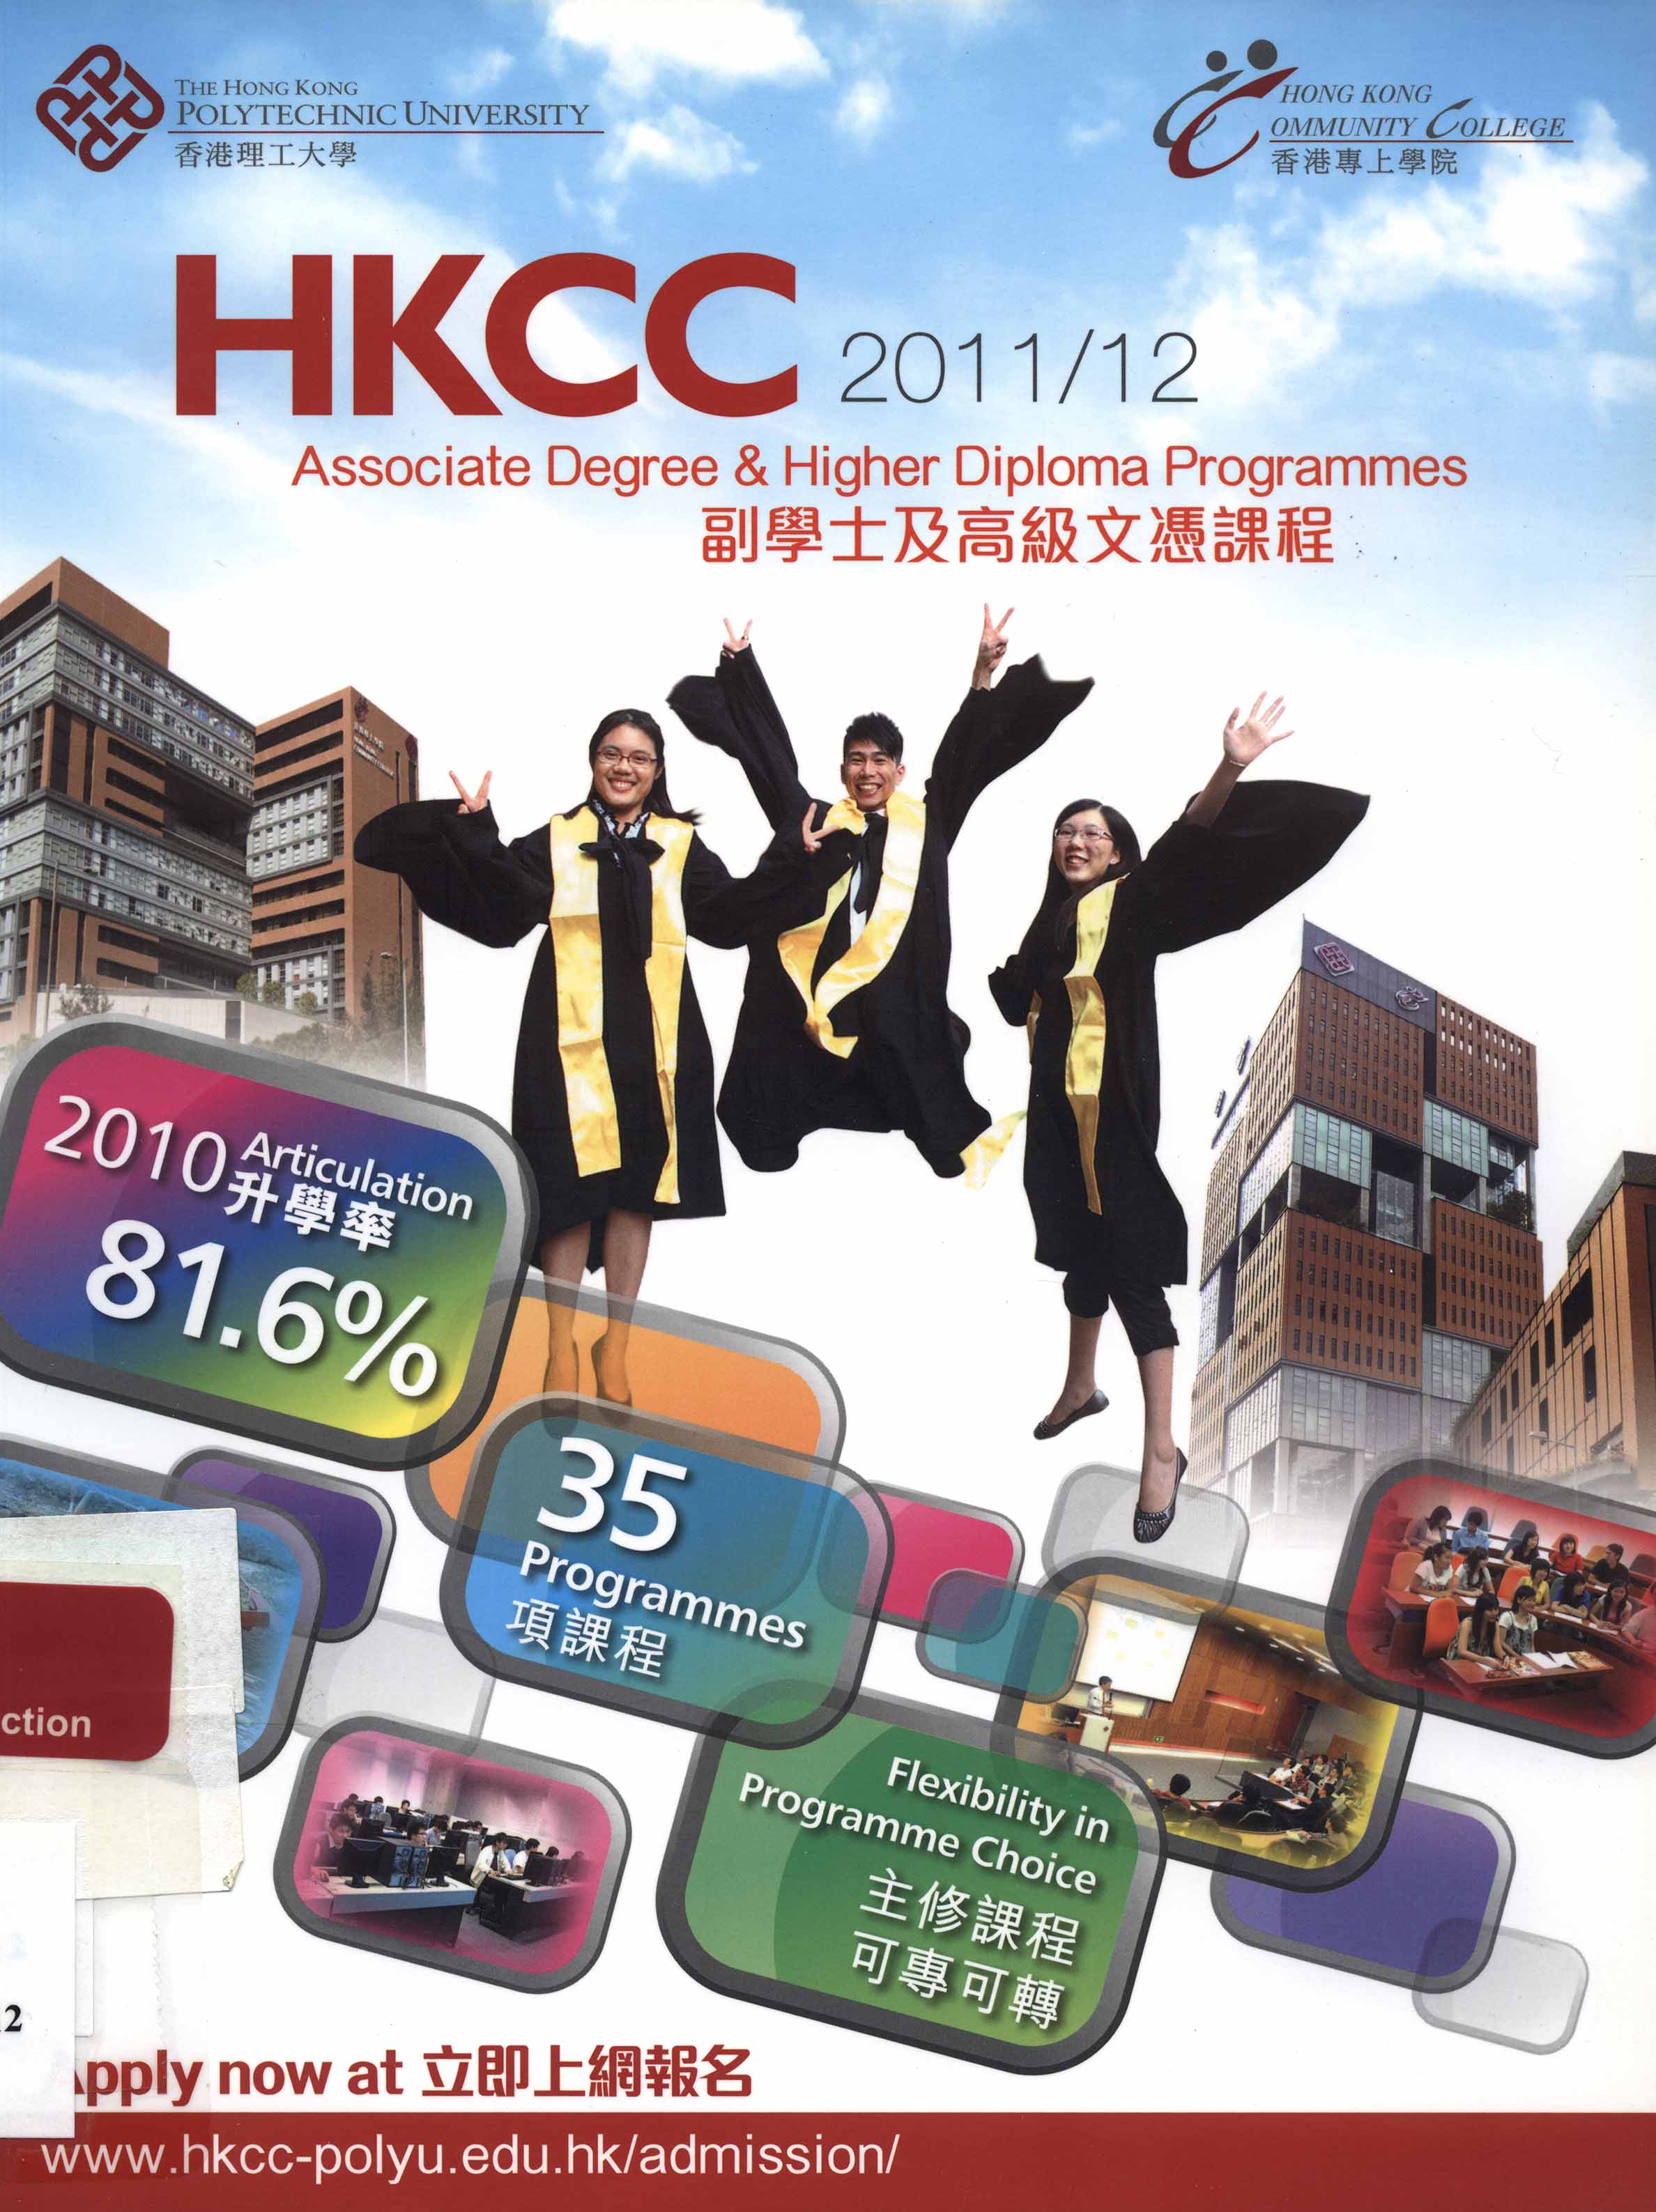 HKCC Associate Degree & Higher Diploma programmes : [guide to enrolment 2011/12]